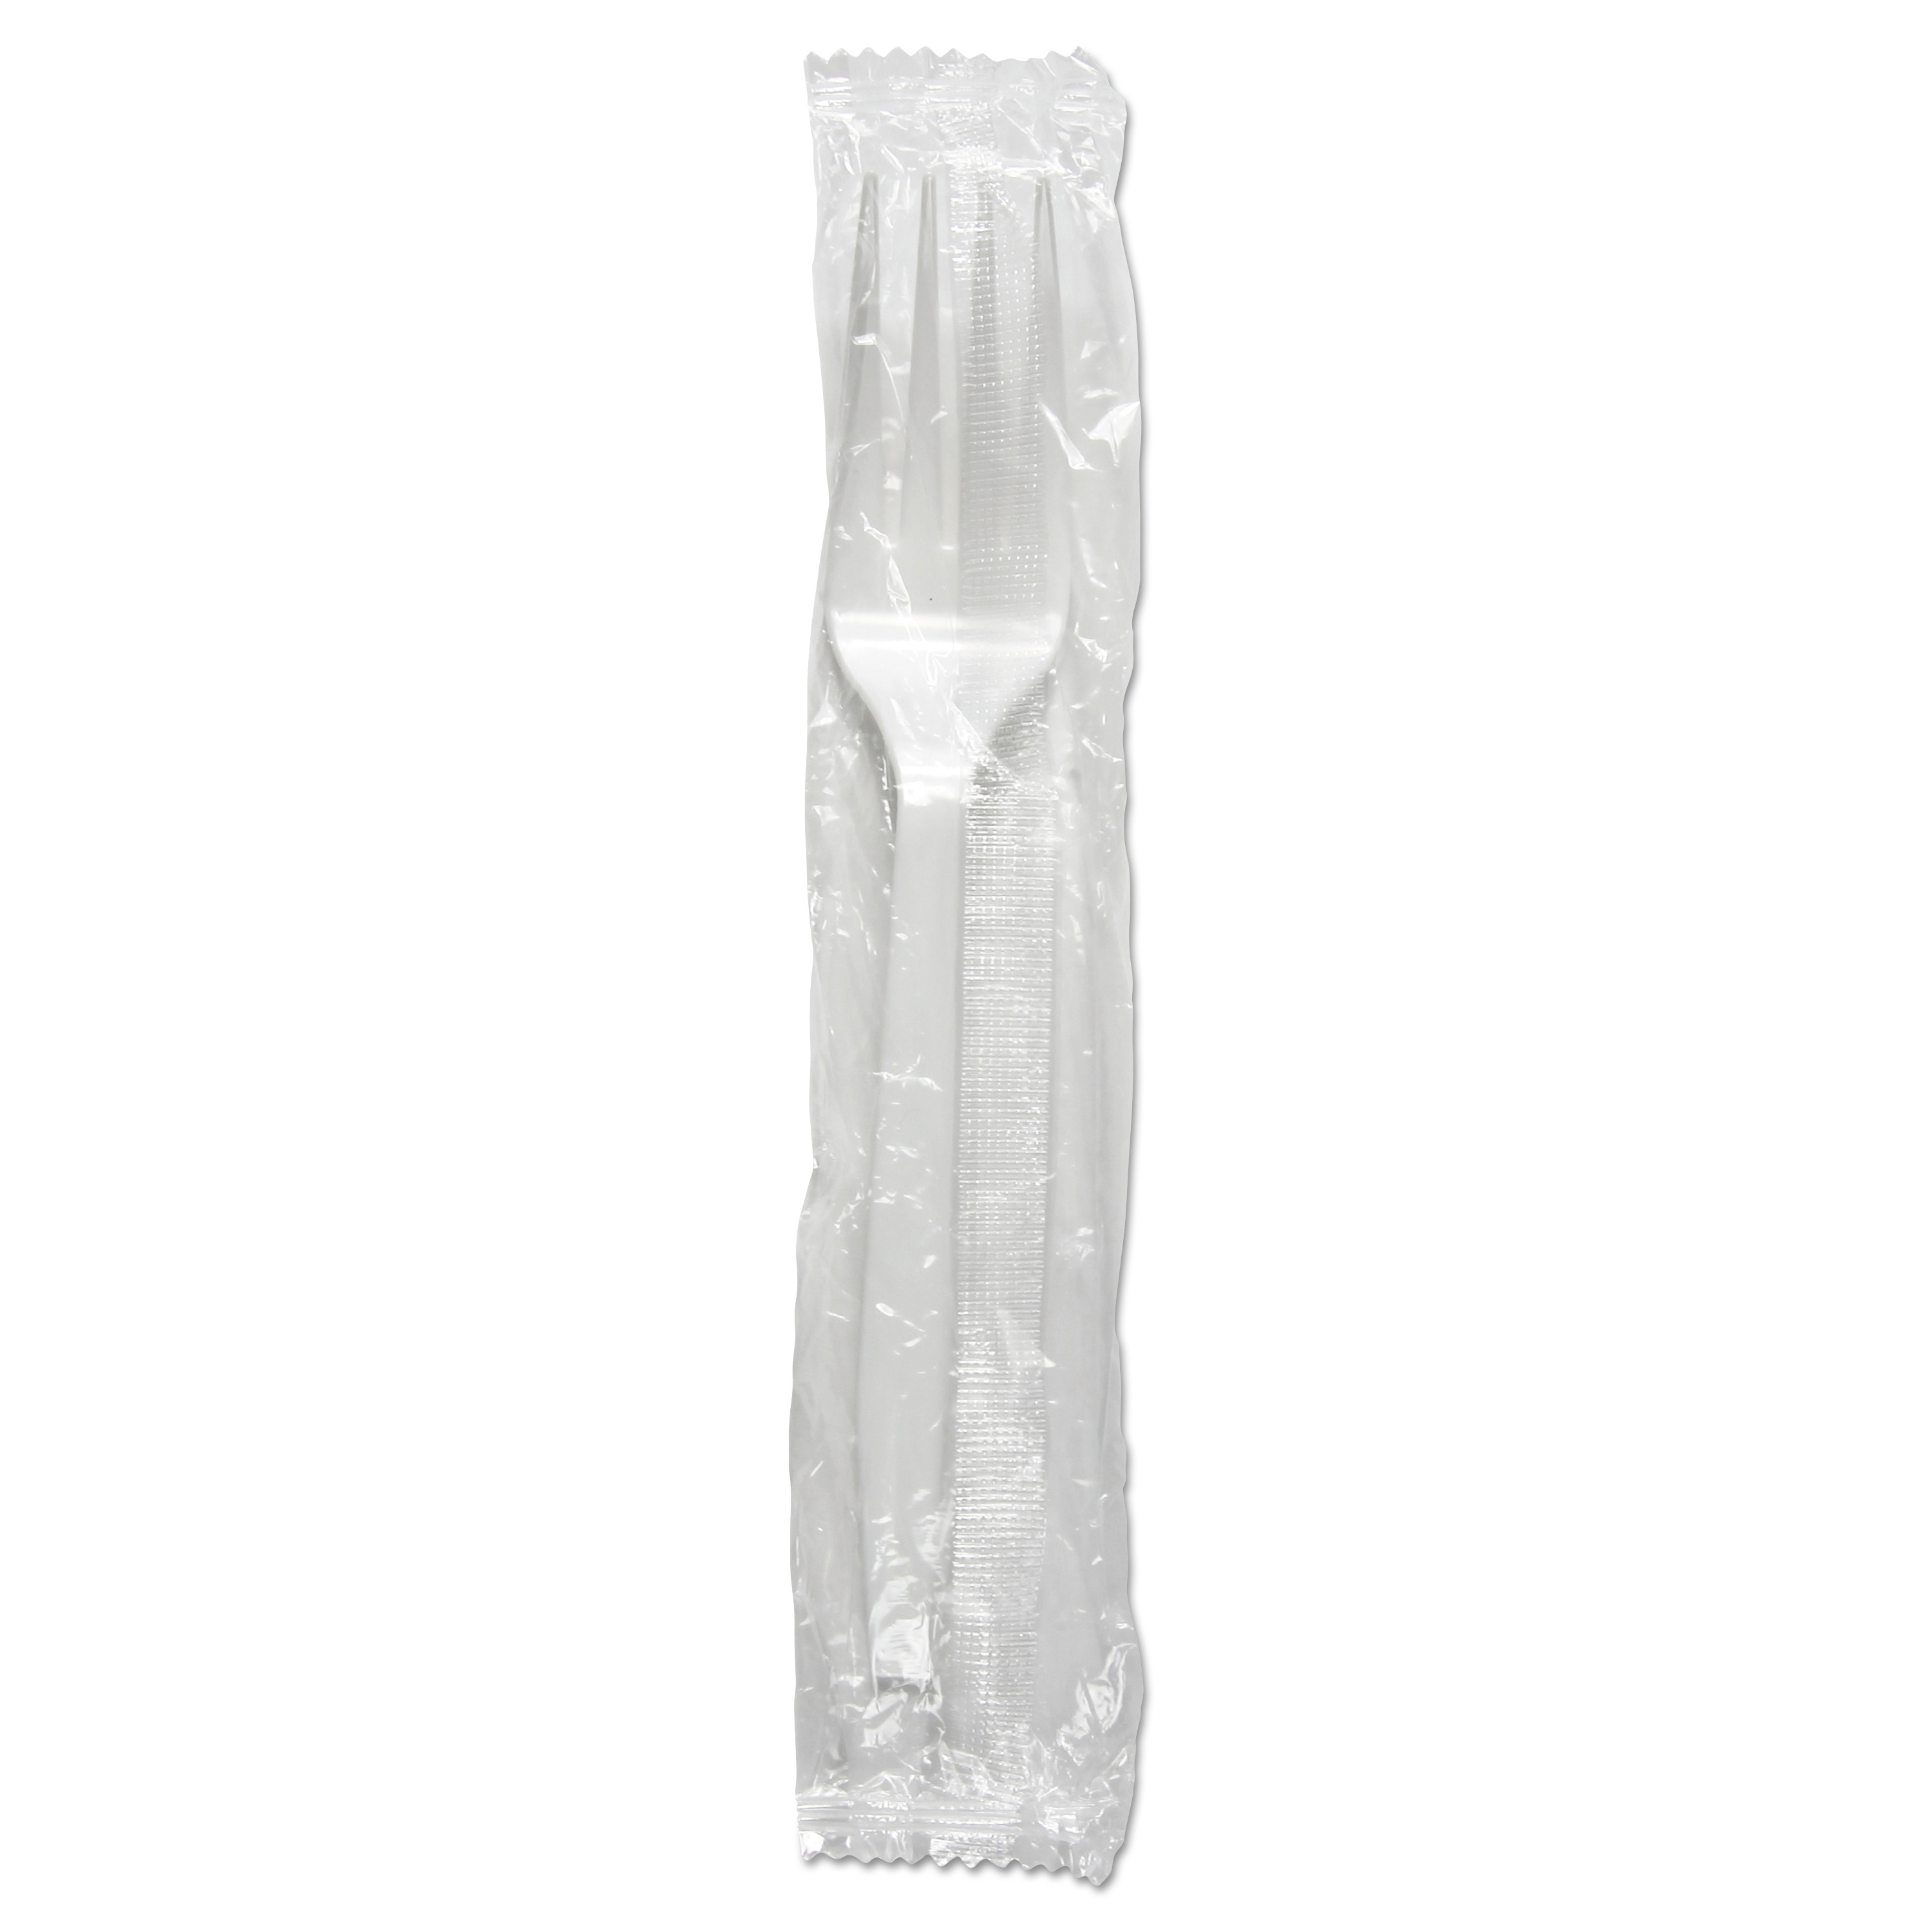 Mediumweight Wrapped Polystyrene Cutlery, Fork, White, 1000/Carton